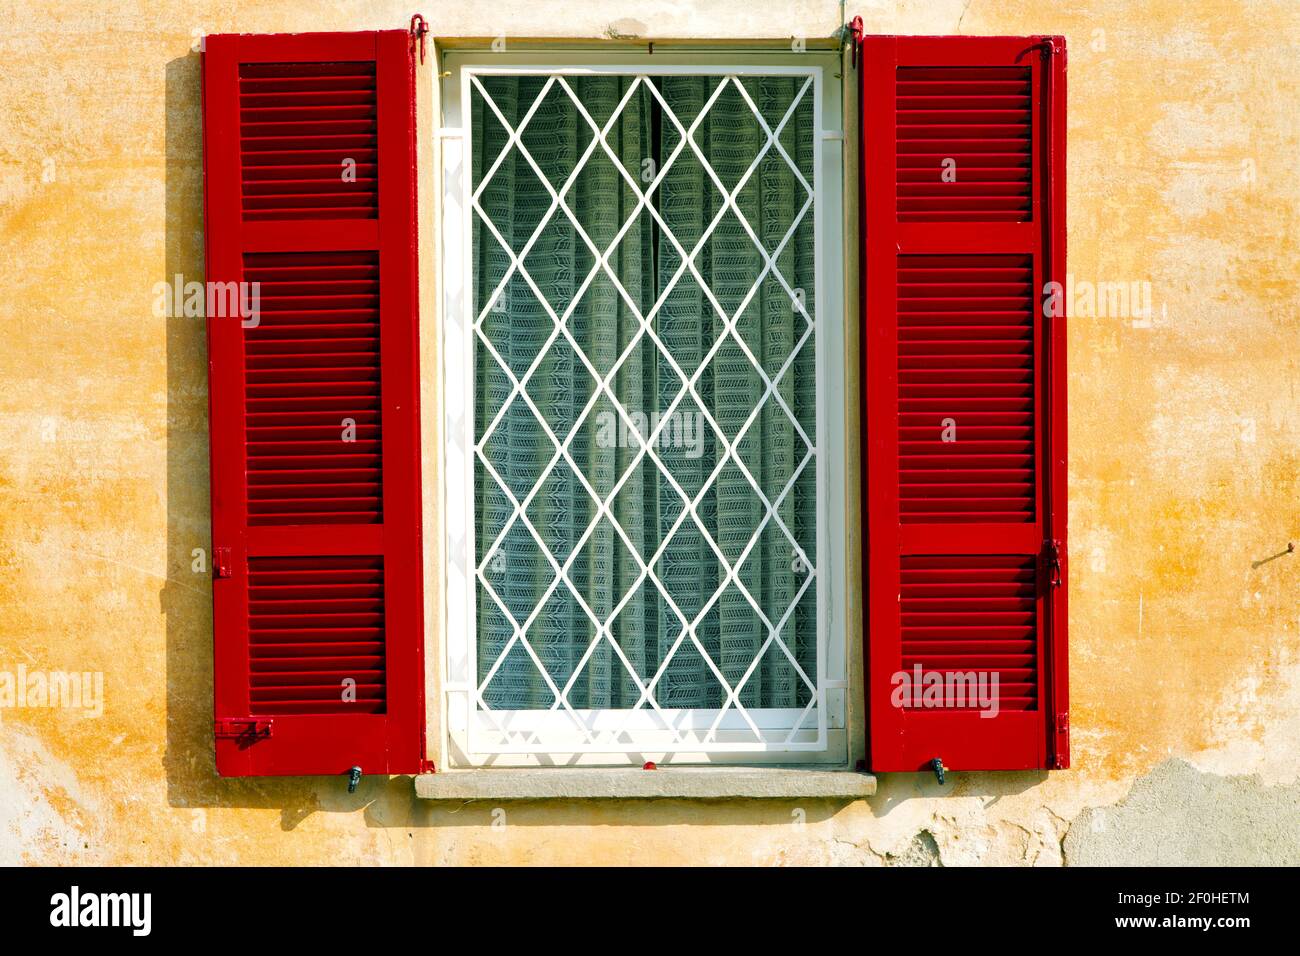 Red window  varano borghi  italy   abstract  sunny day  tent grate Stock Photo